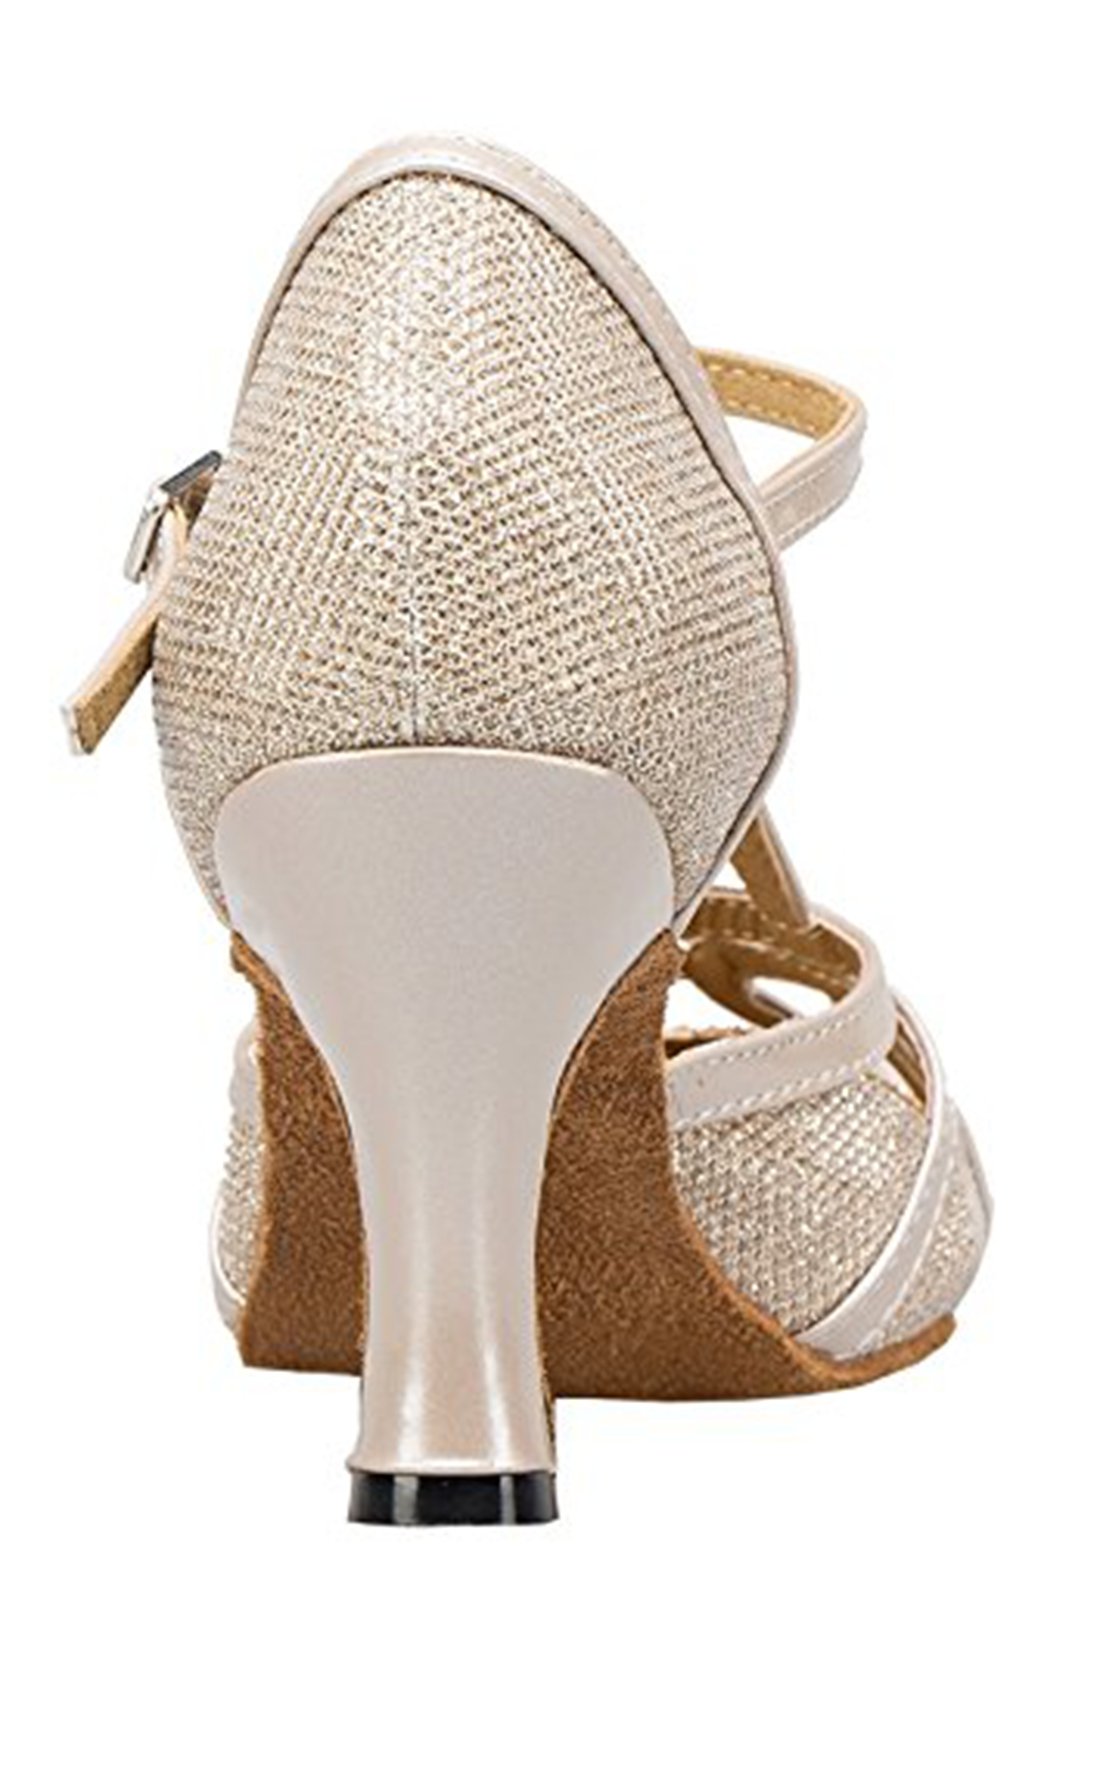 TDA Womens Mid Heel Champagne PU Leather Salsa Tango Ballroom Latin Party Dance Shoes CM101 9 M US